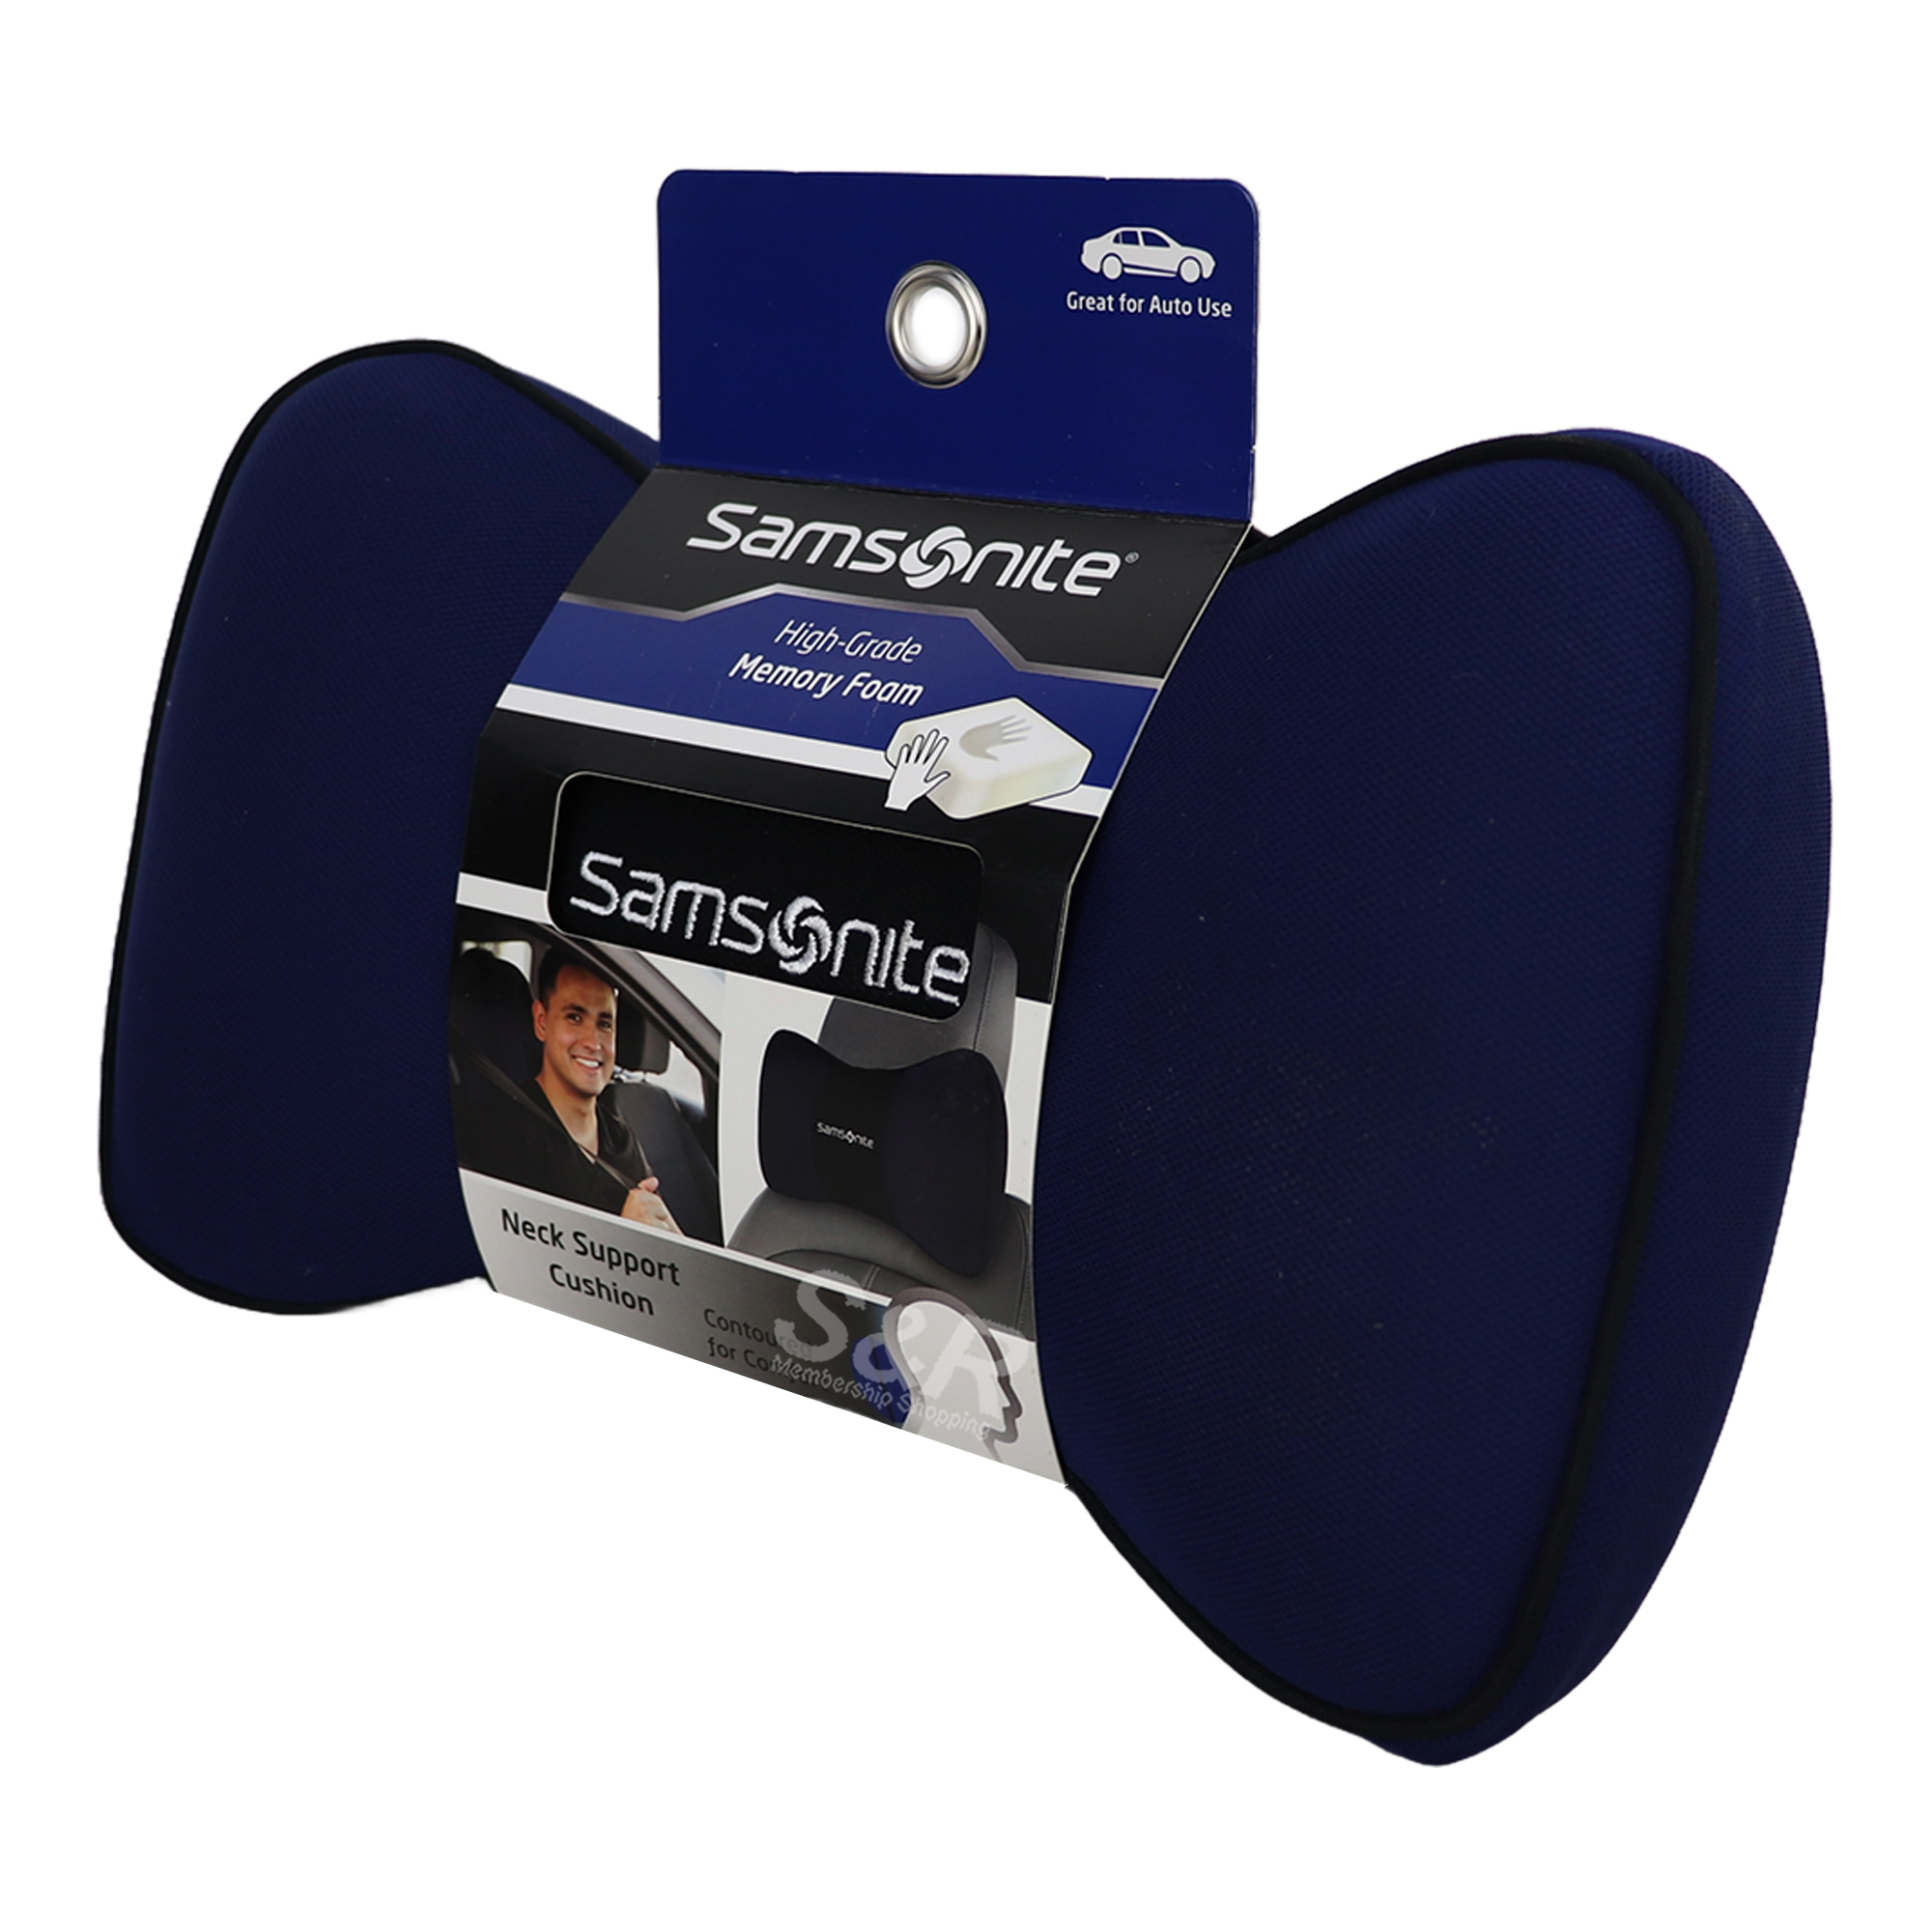 Samsonite Neck Support Cushion